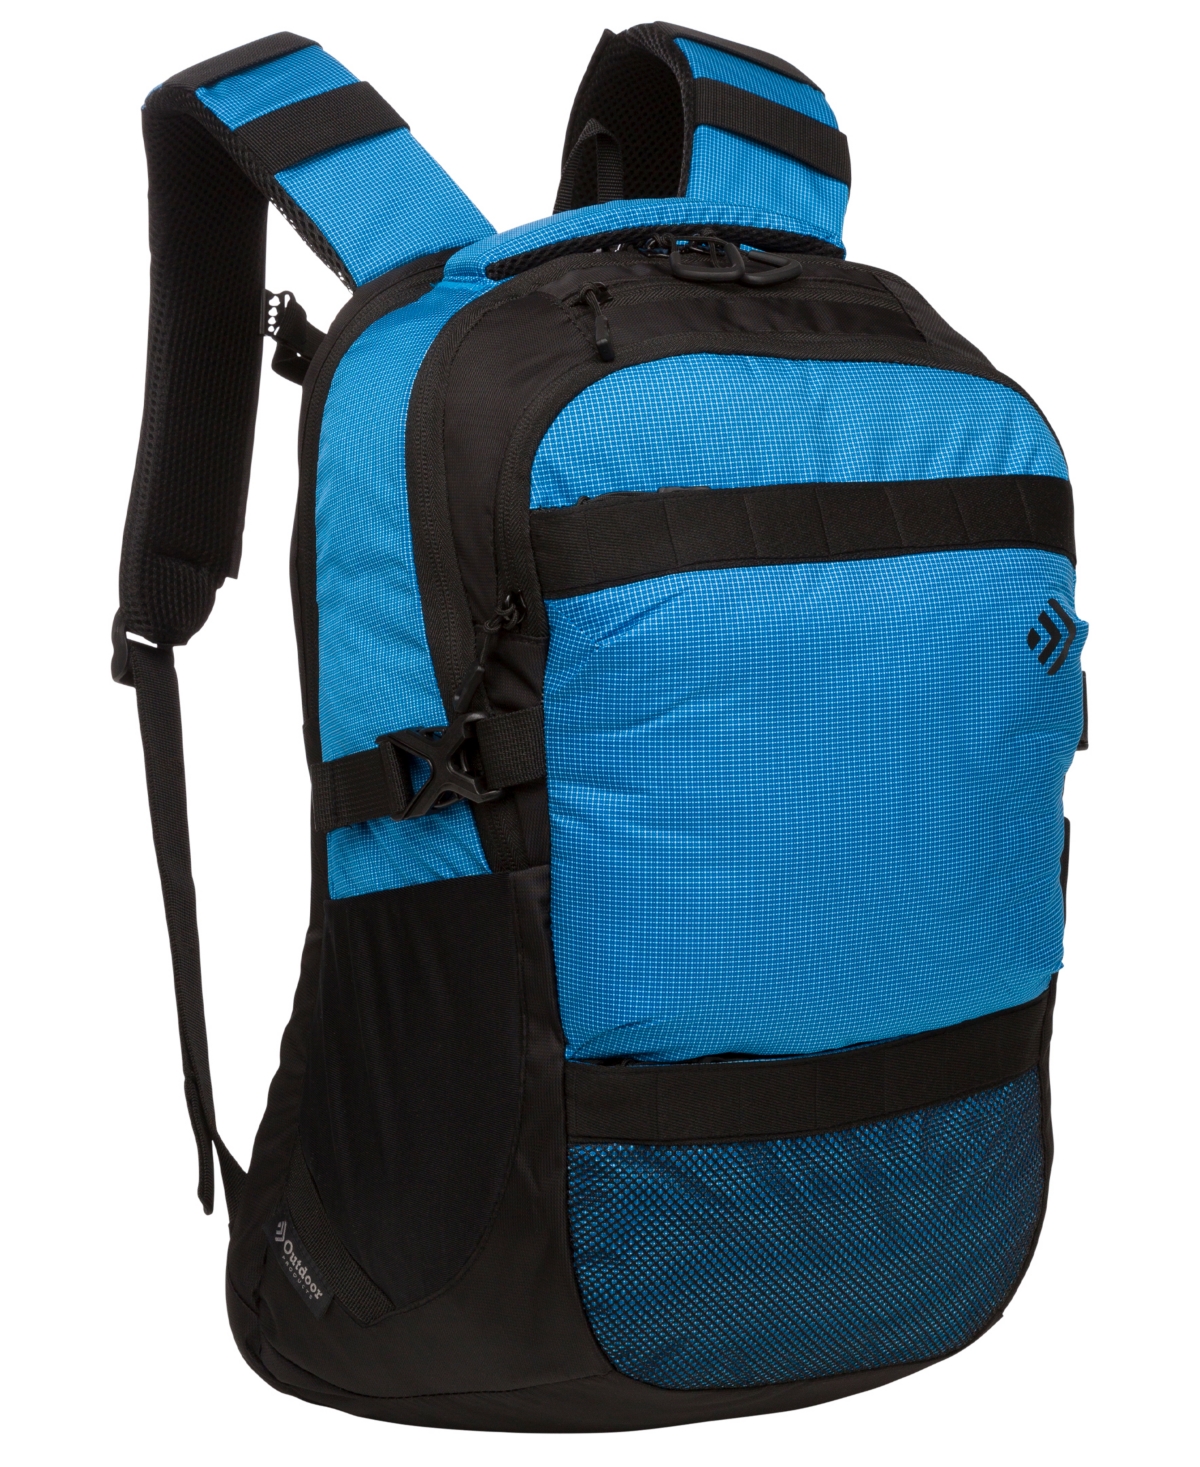 Rainier Outdoor Backpack - Black